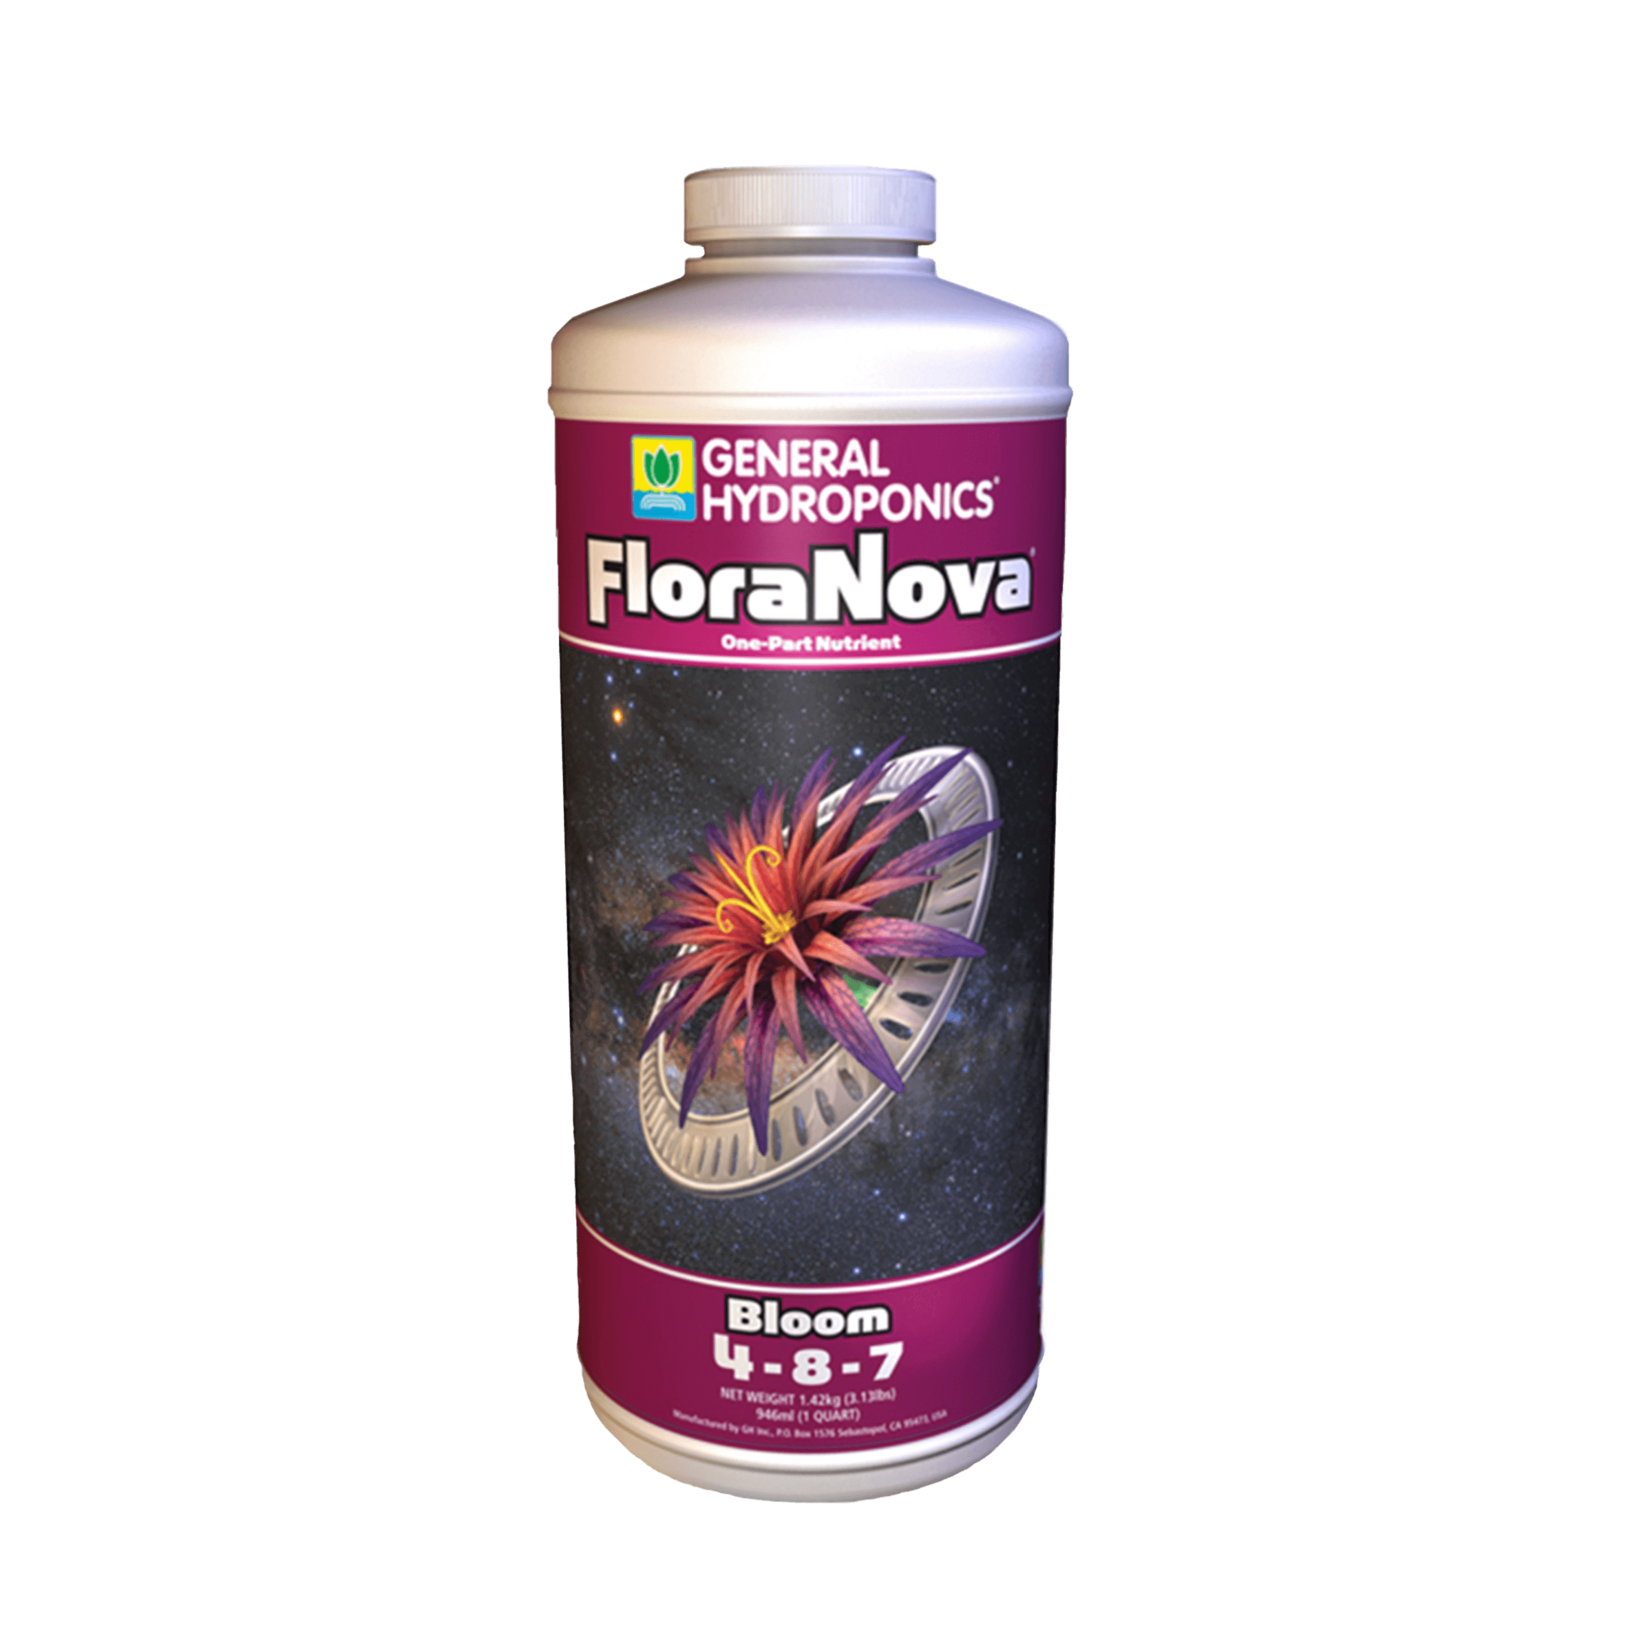 General Hydroponics General Hydroponics FloraNova Bloom 1 quart